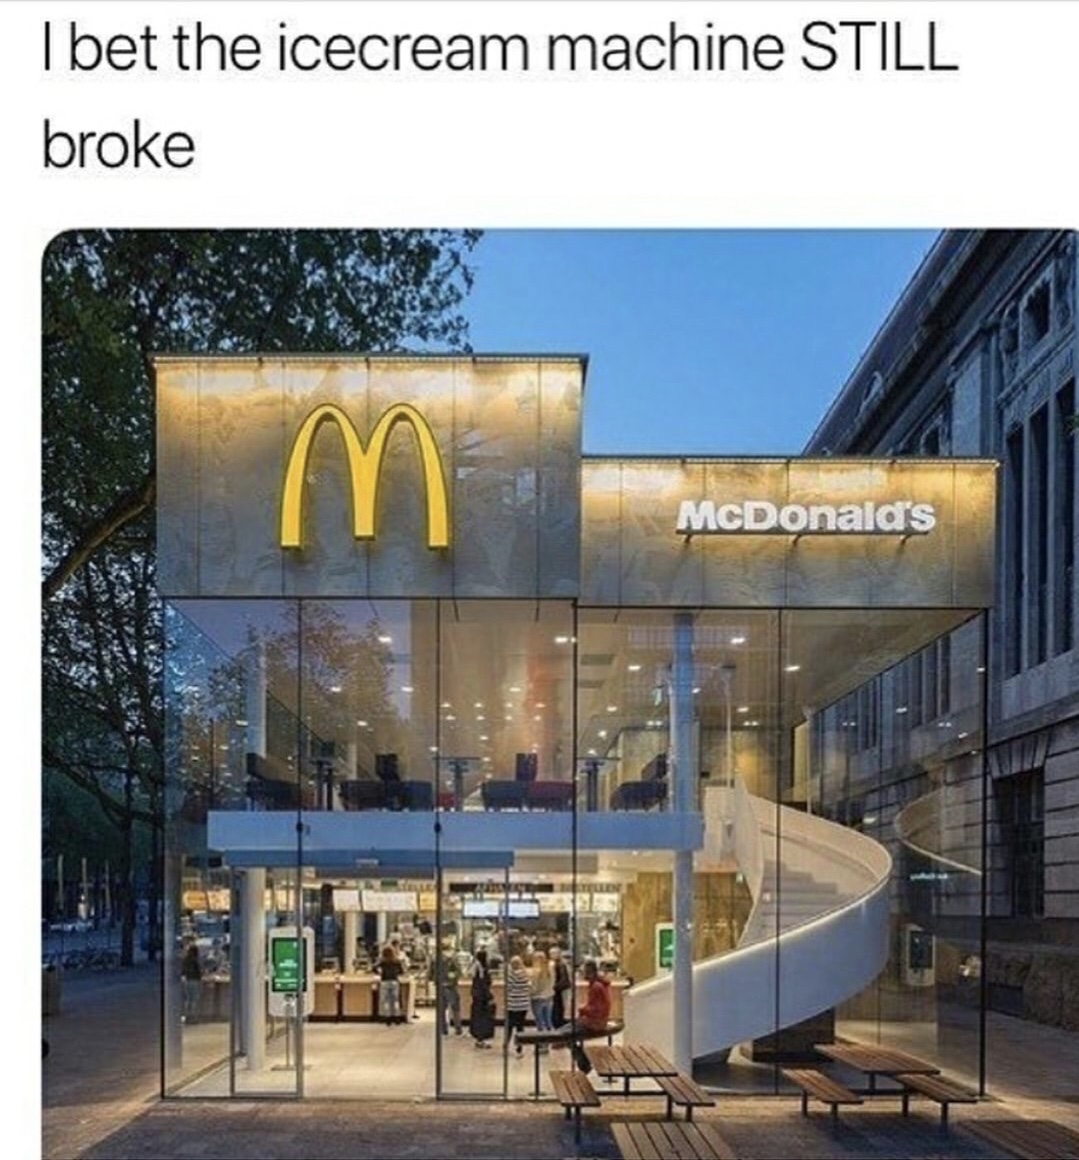 fanciest mcdonald's - I bet the icecream machine Still broke McDonald's